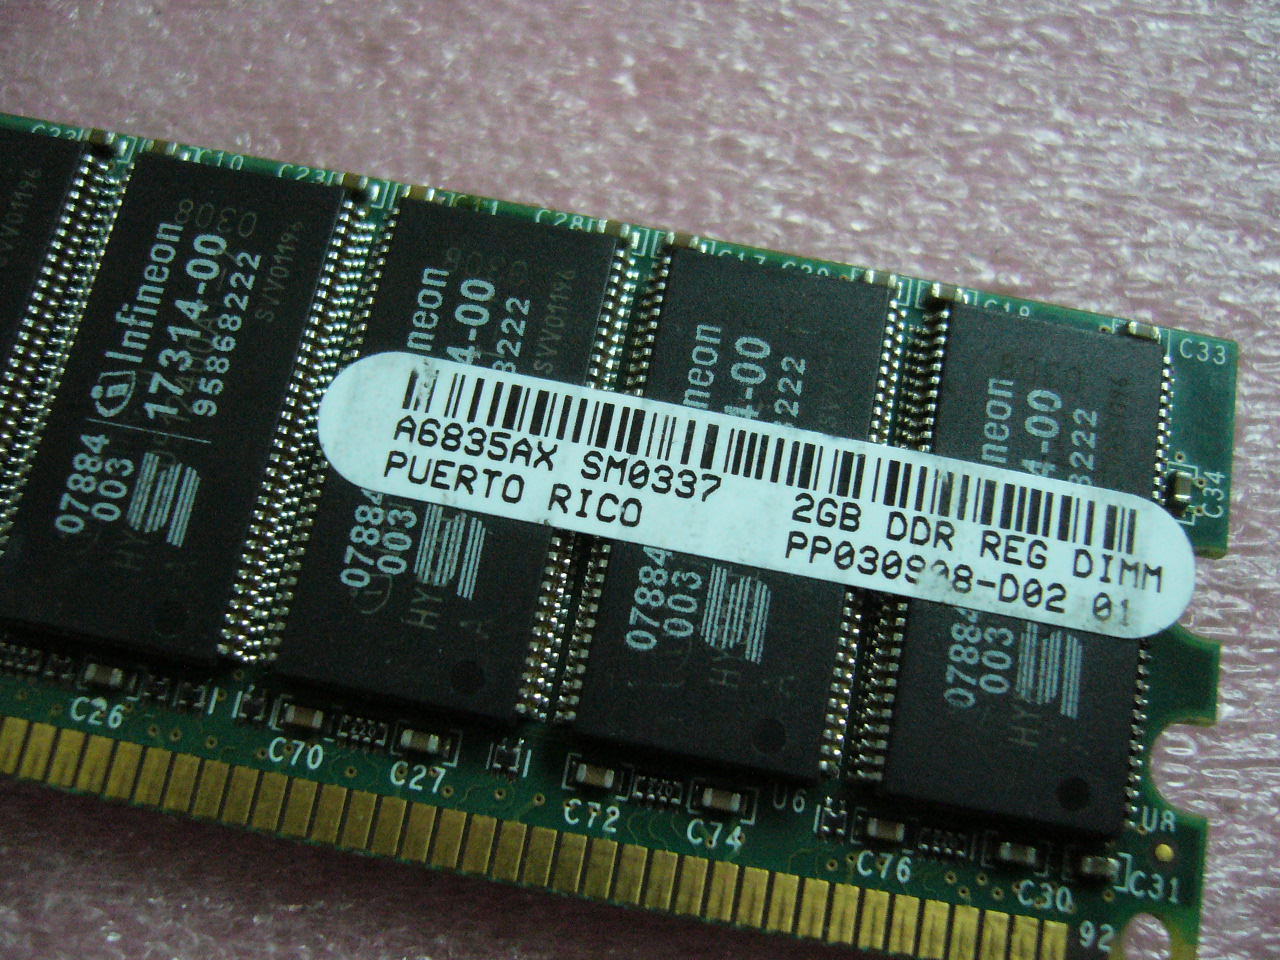 1x 2GB DDR 266 PC-2100R ECC Registered Server memory HP PN A6835AX - Click Image to Close